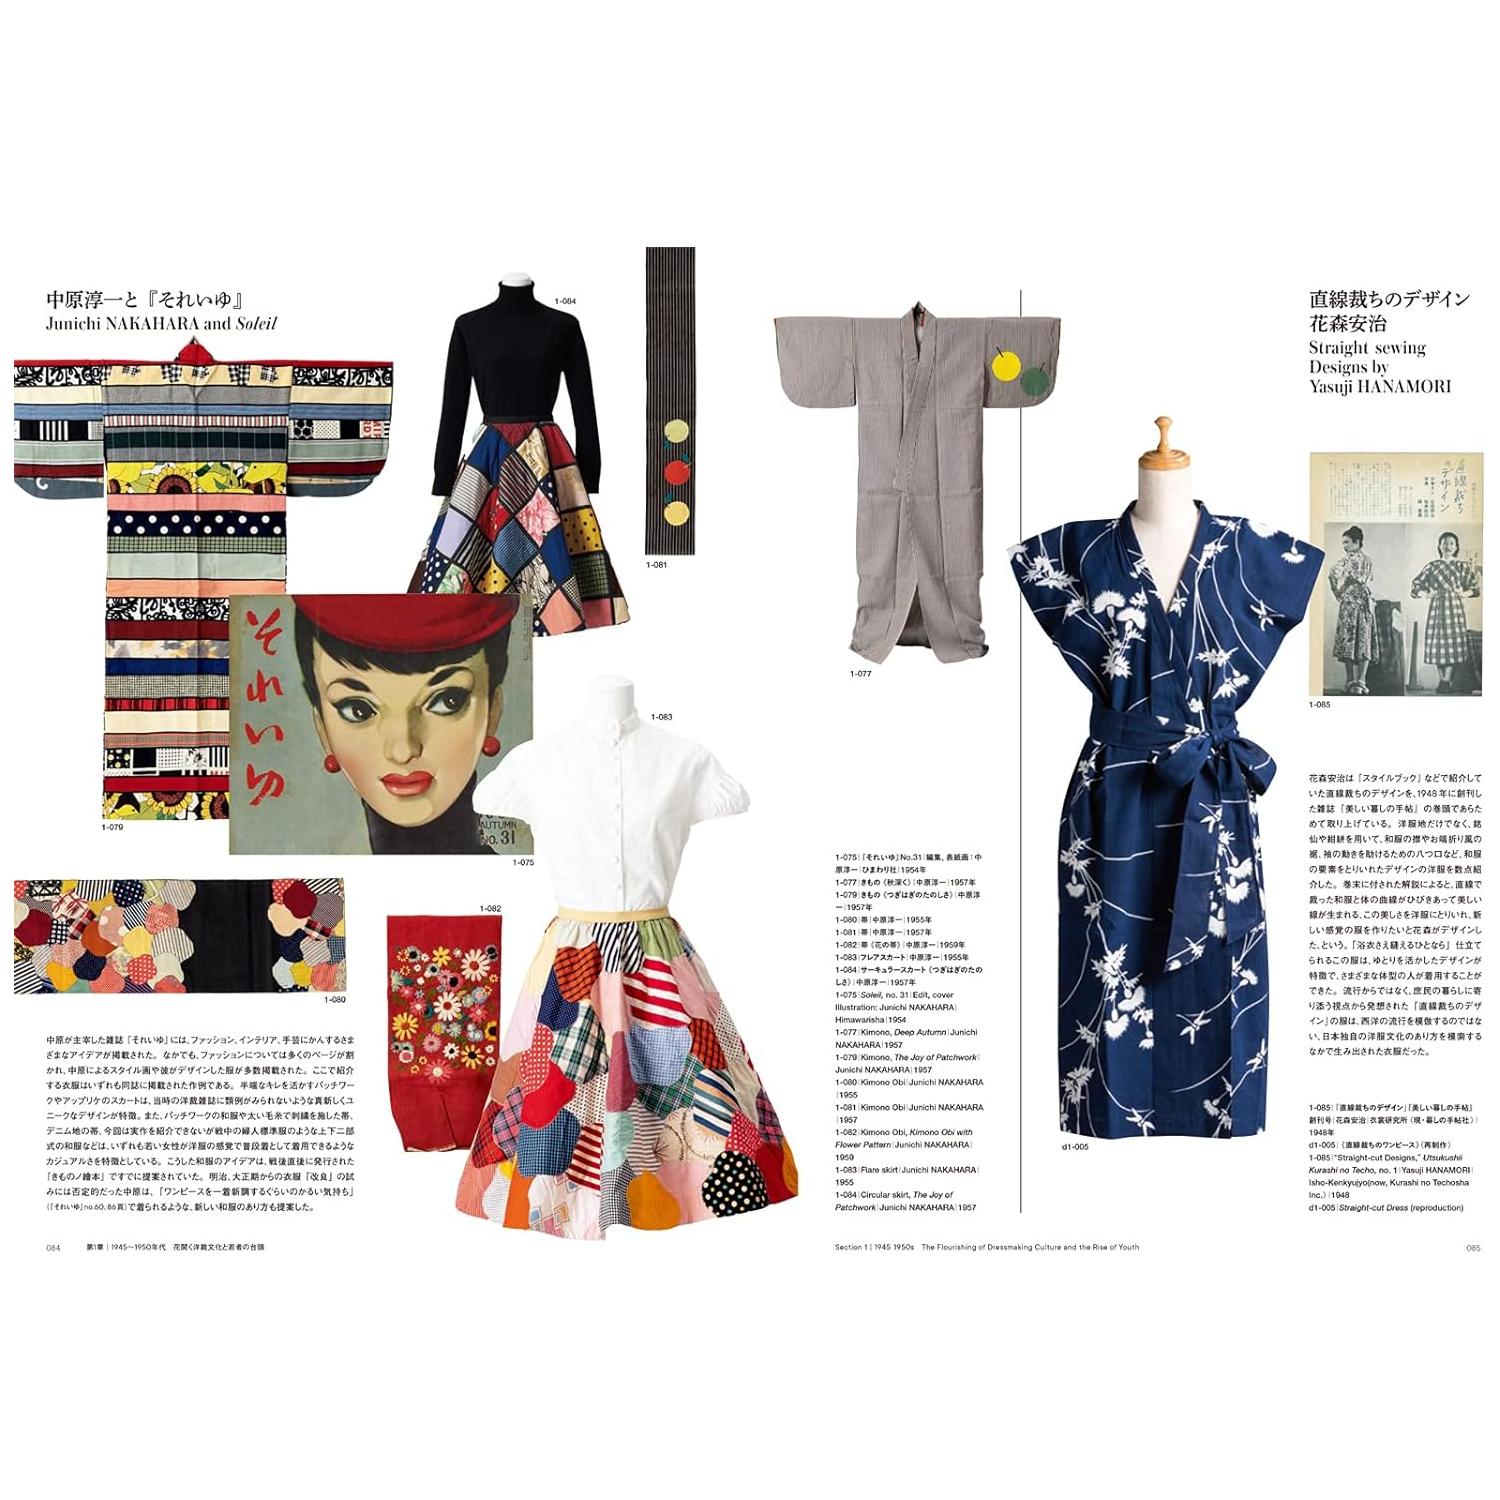 Fashion in Japan 1945–2020